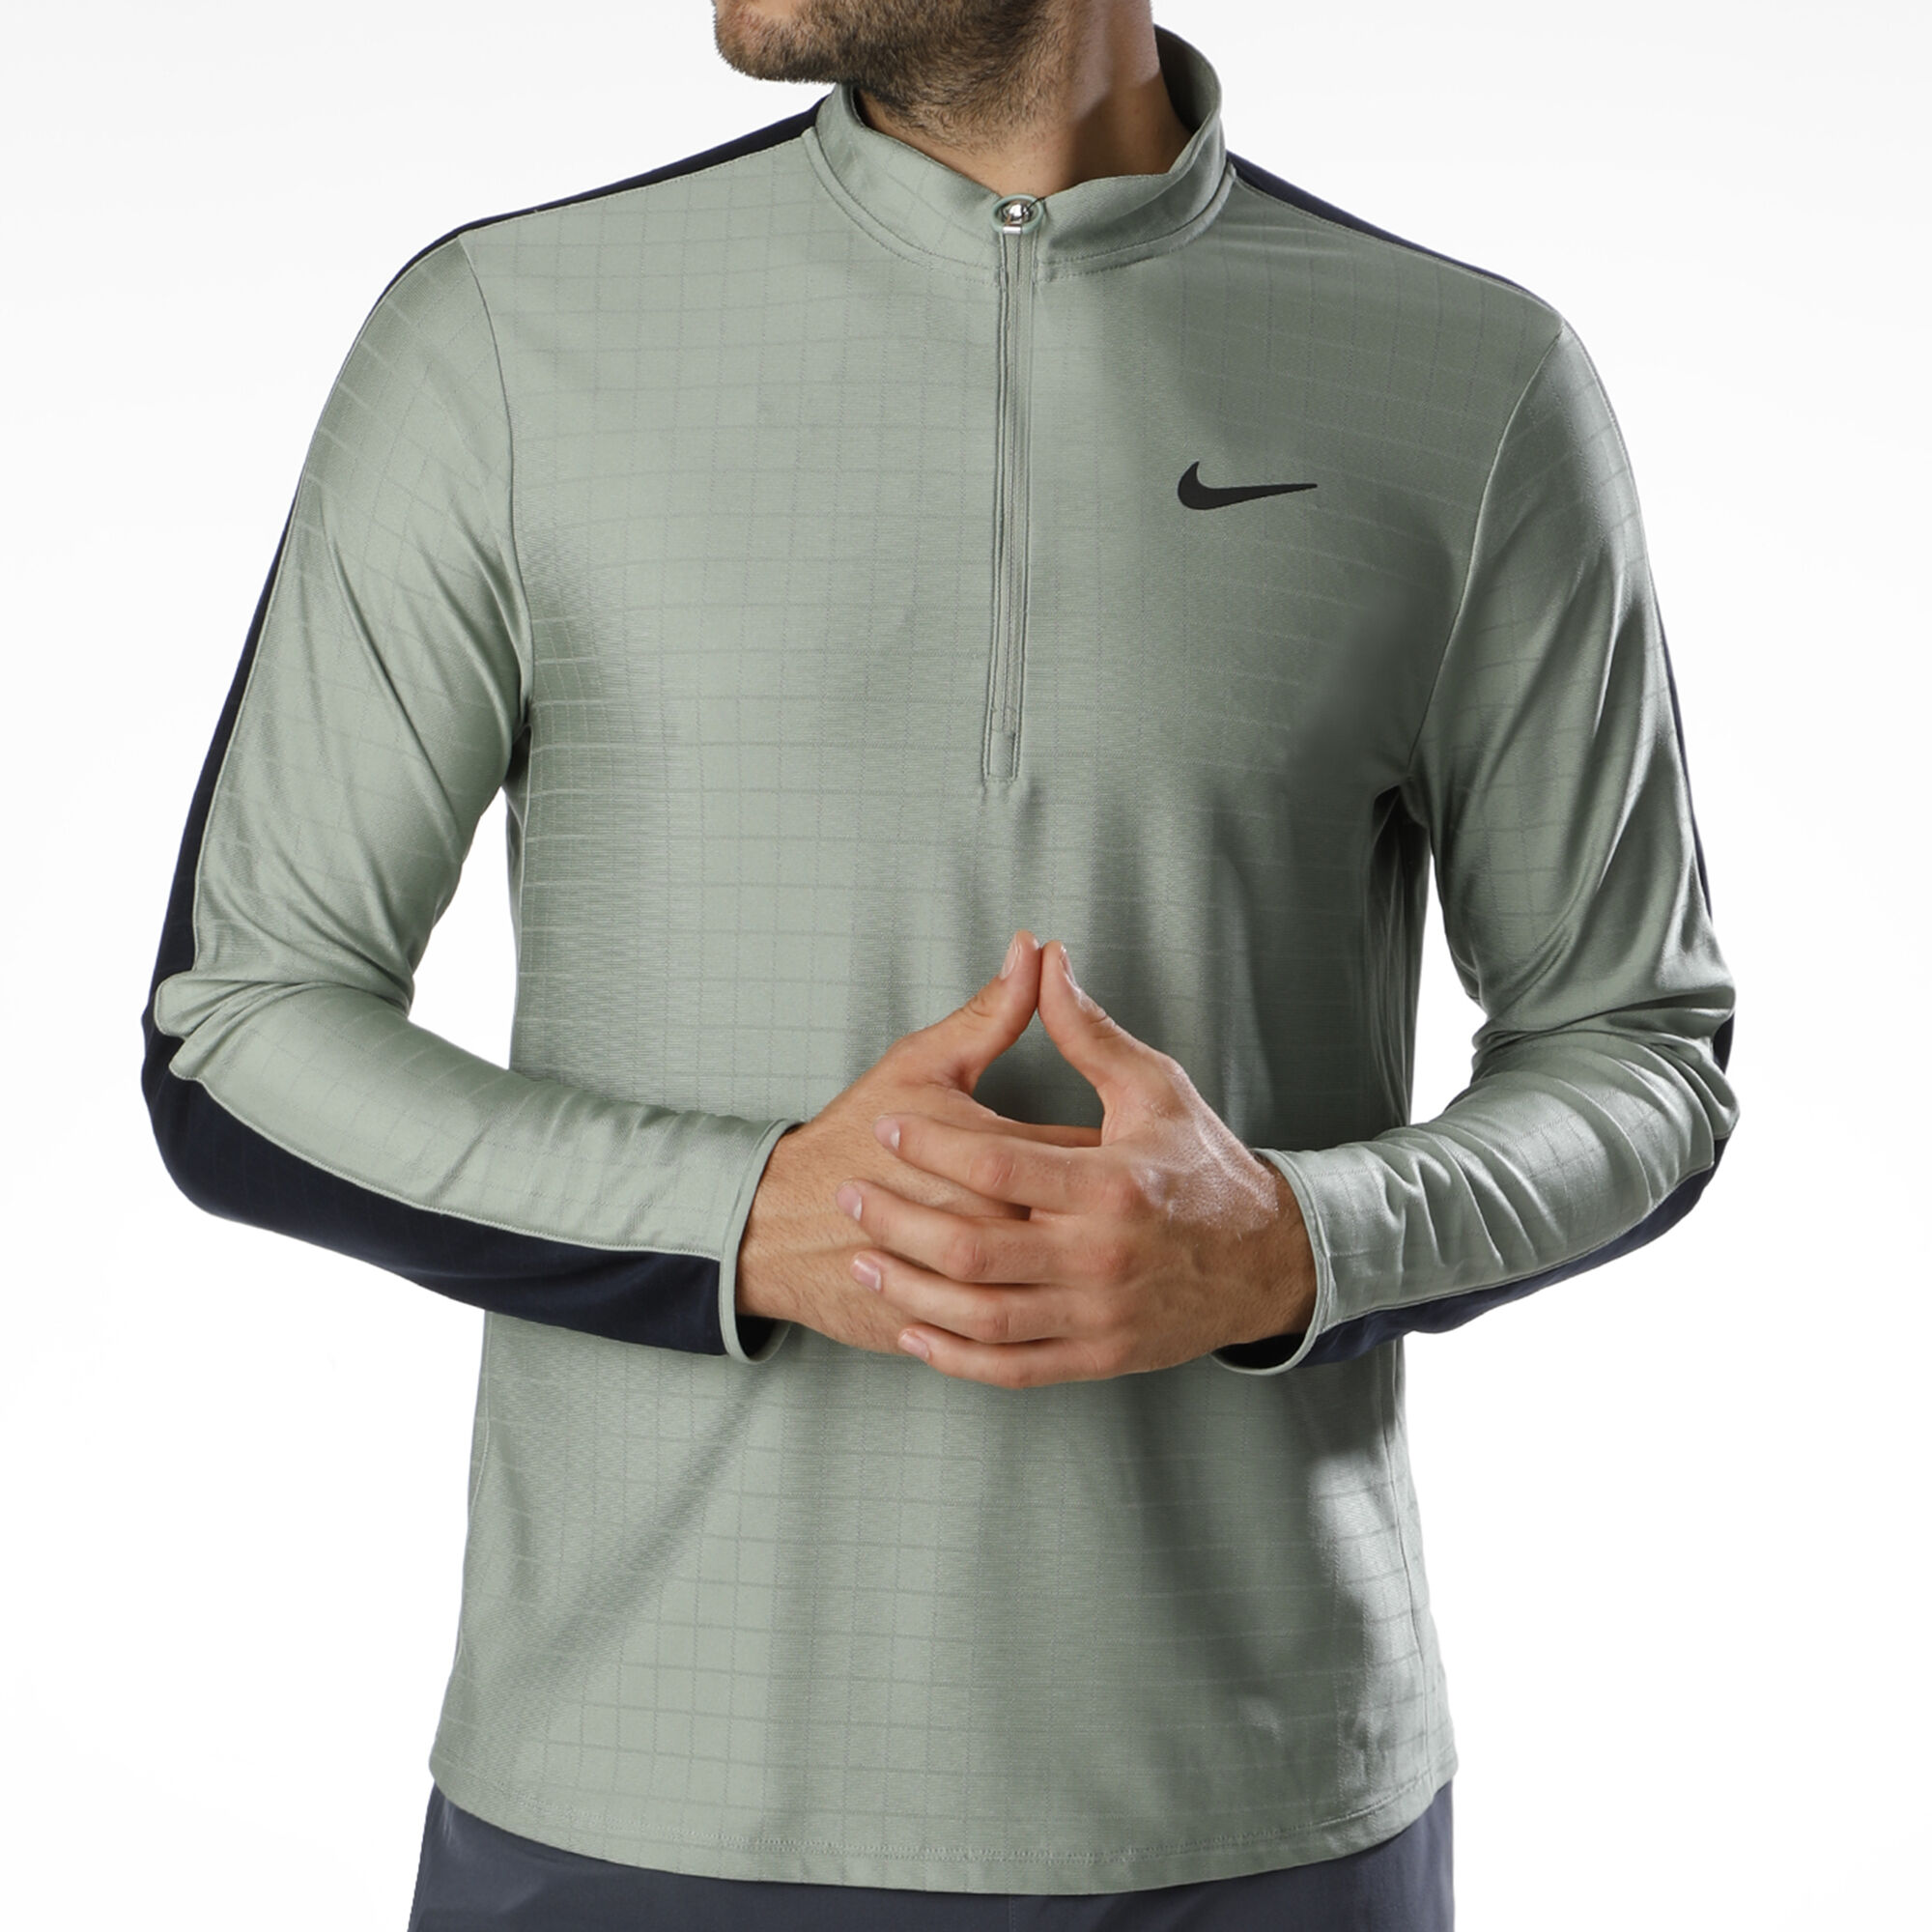 Nike Training Dri-FIT Superset half-zip long sleeve top in gray